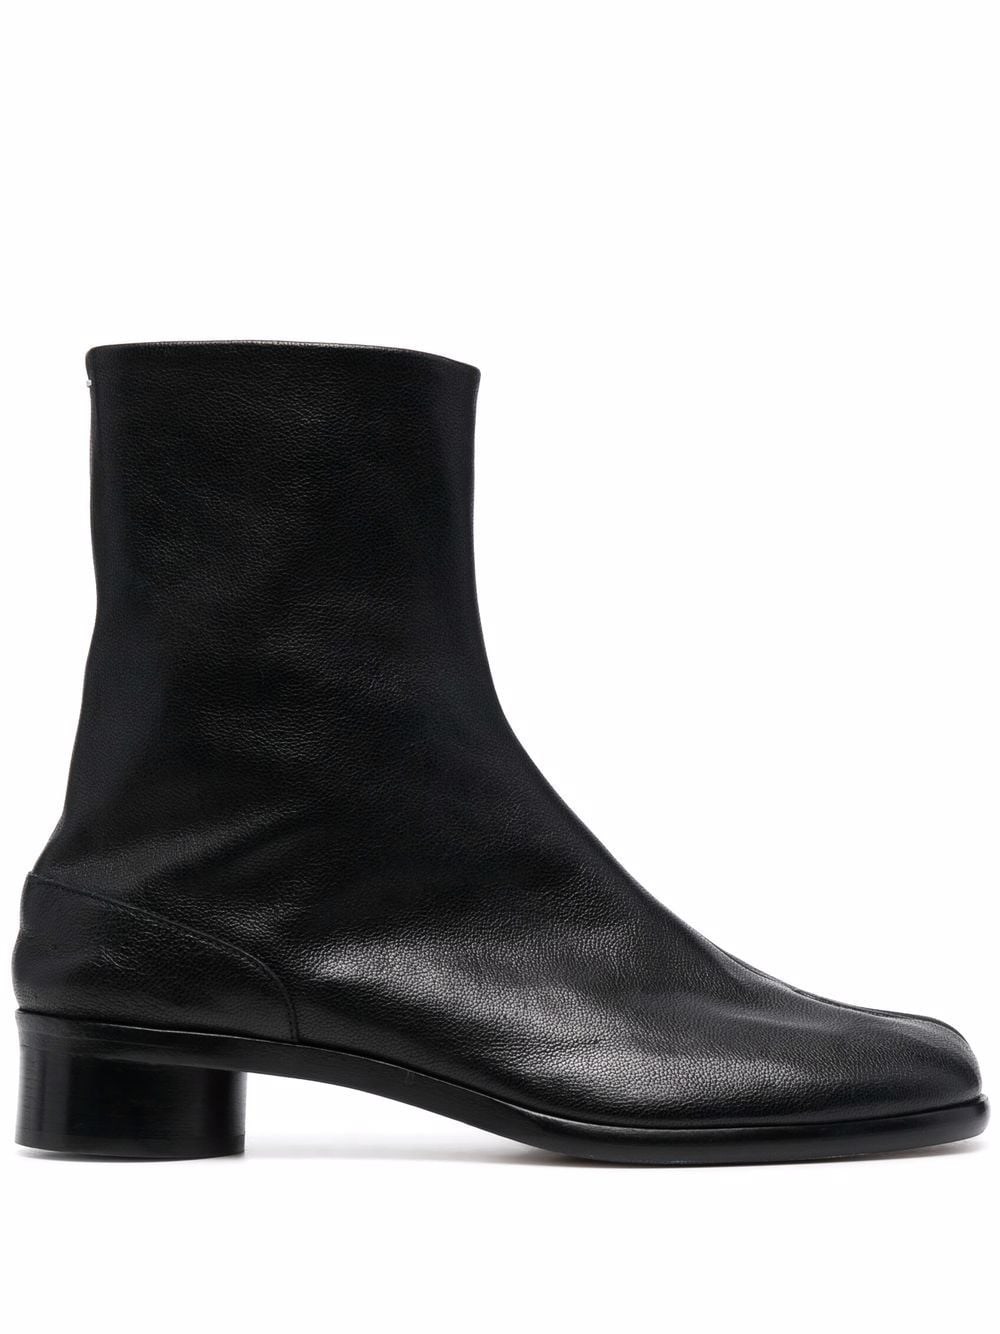 Maison Margiela Tabi Ankle Boots In Black